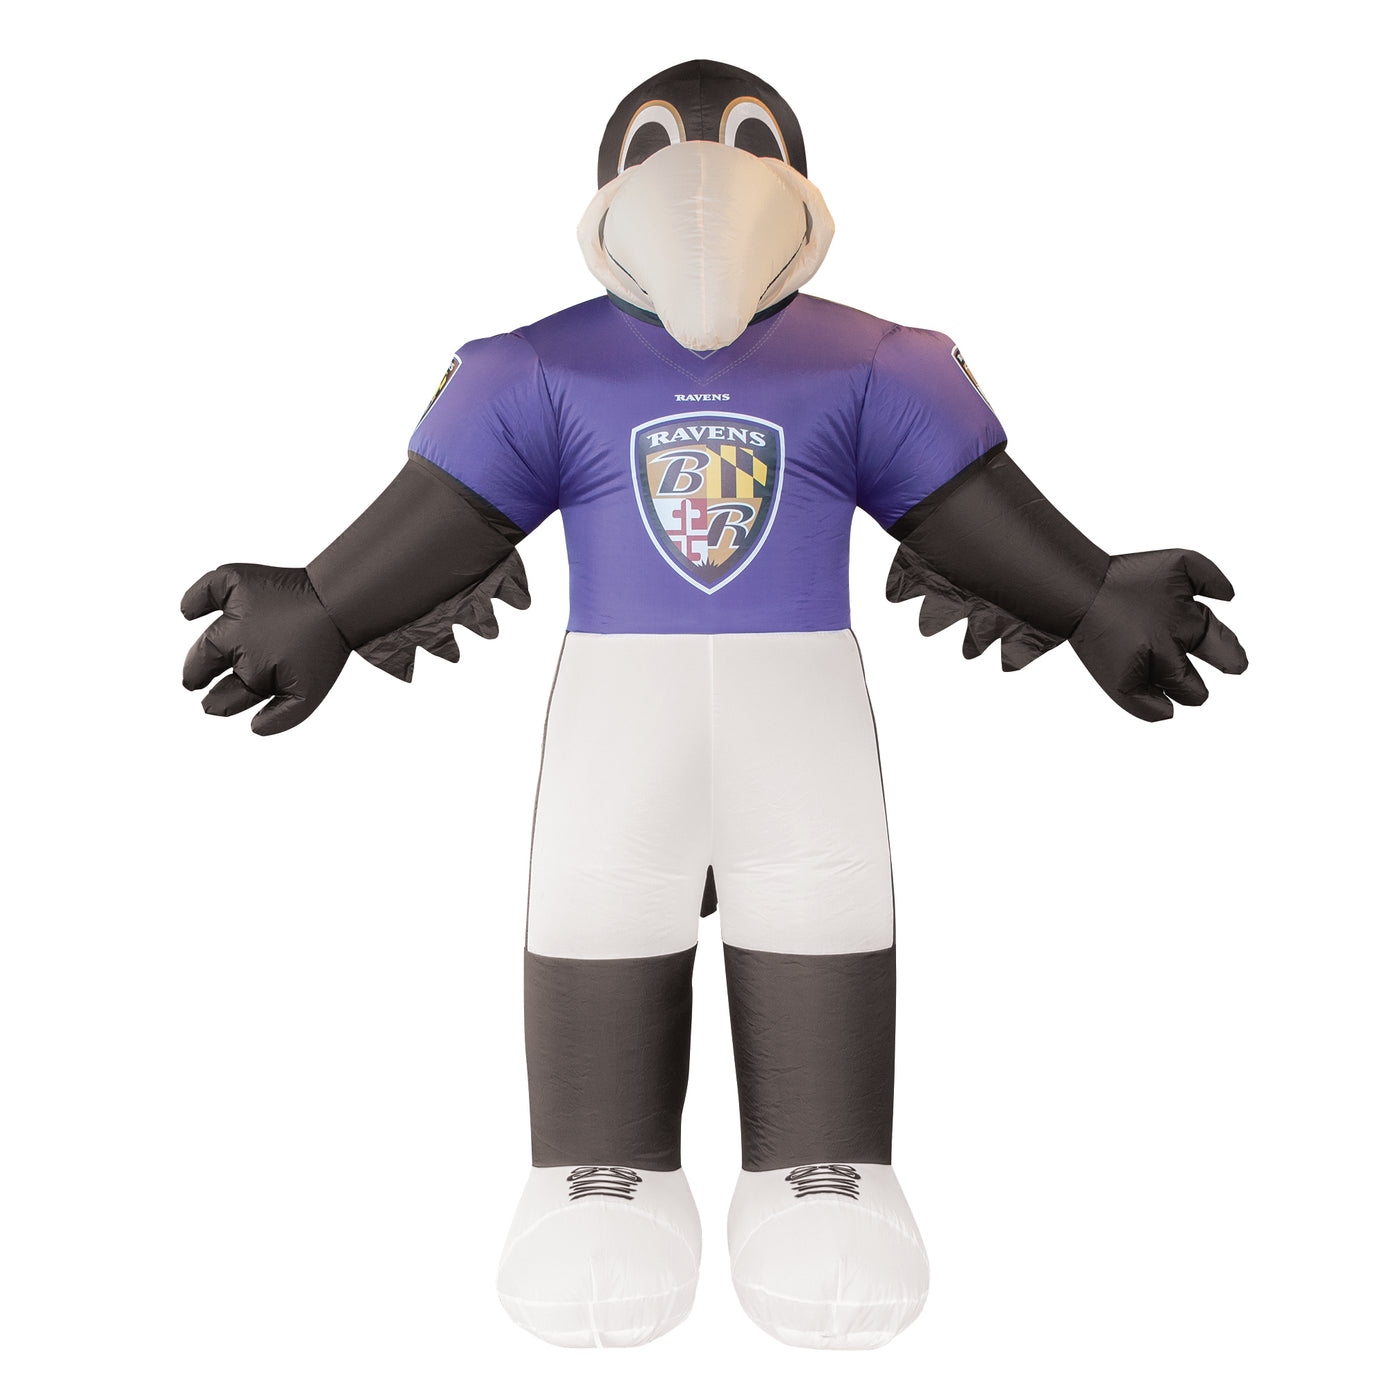 Baltimore Ravens Inflatable Mascot